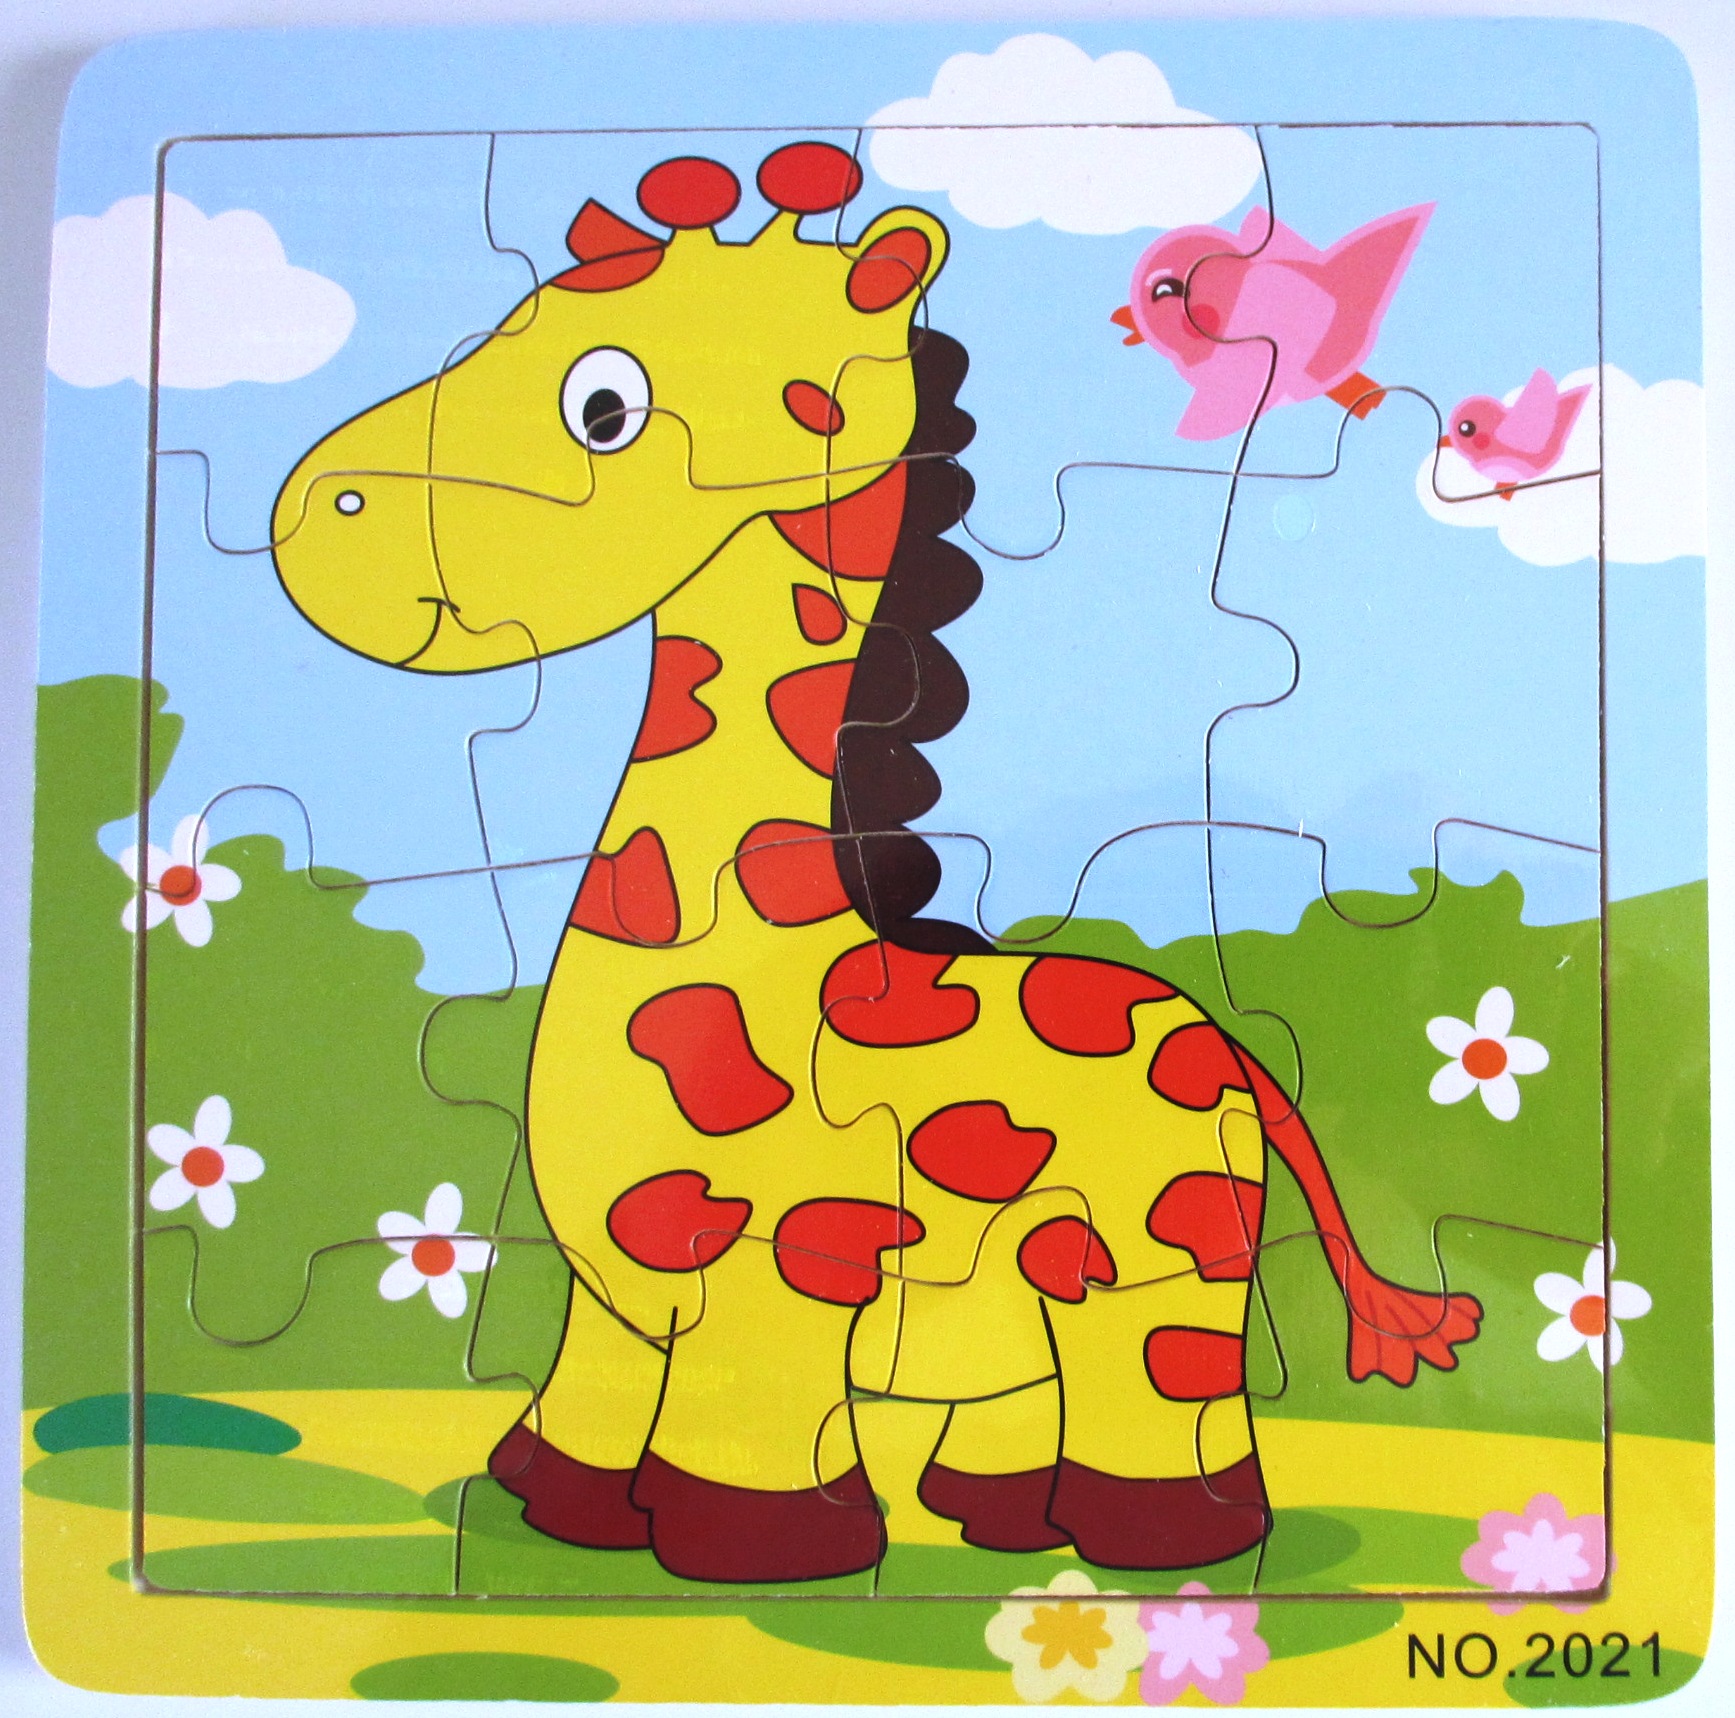 Baby Giraffe wooden jigsaw puzzle